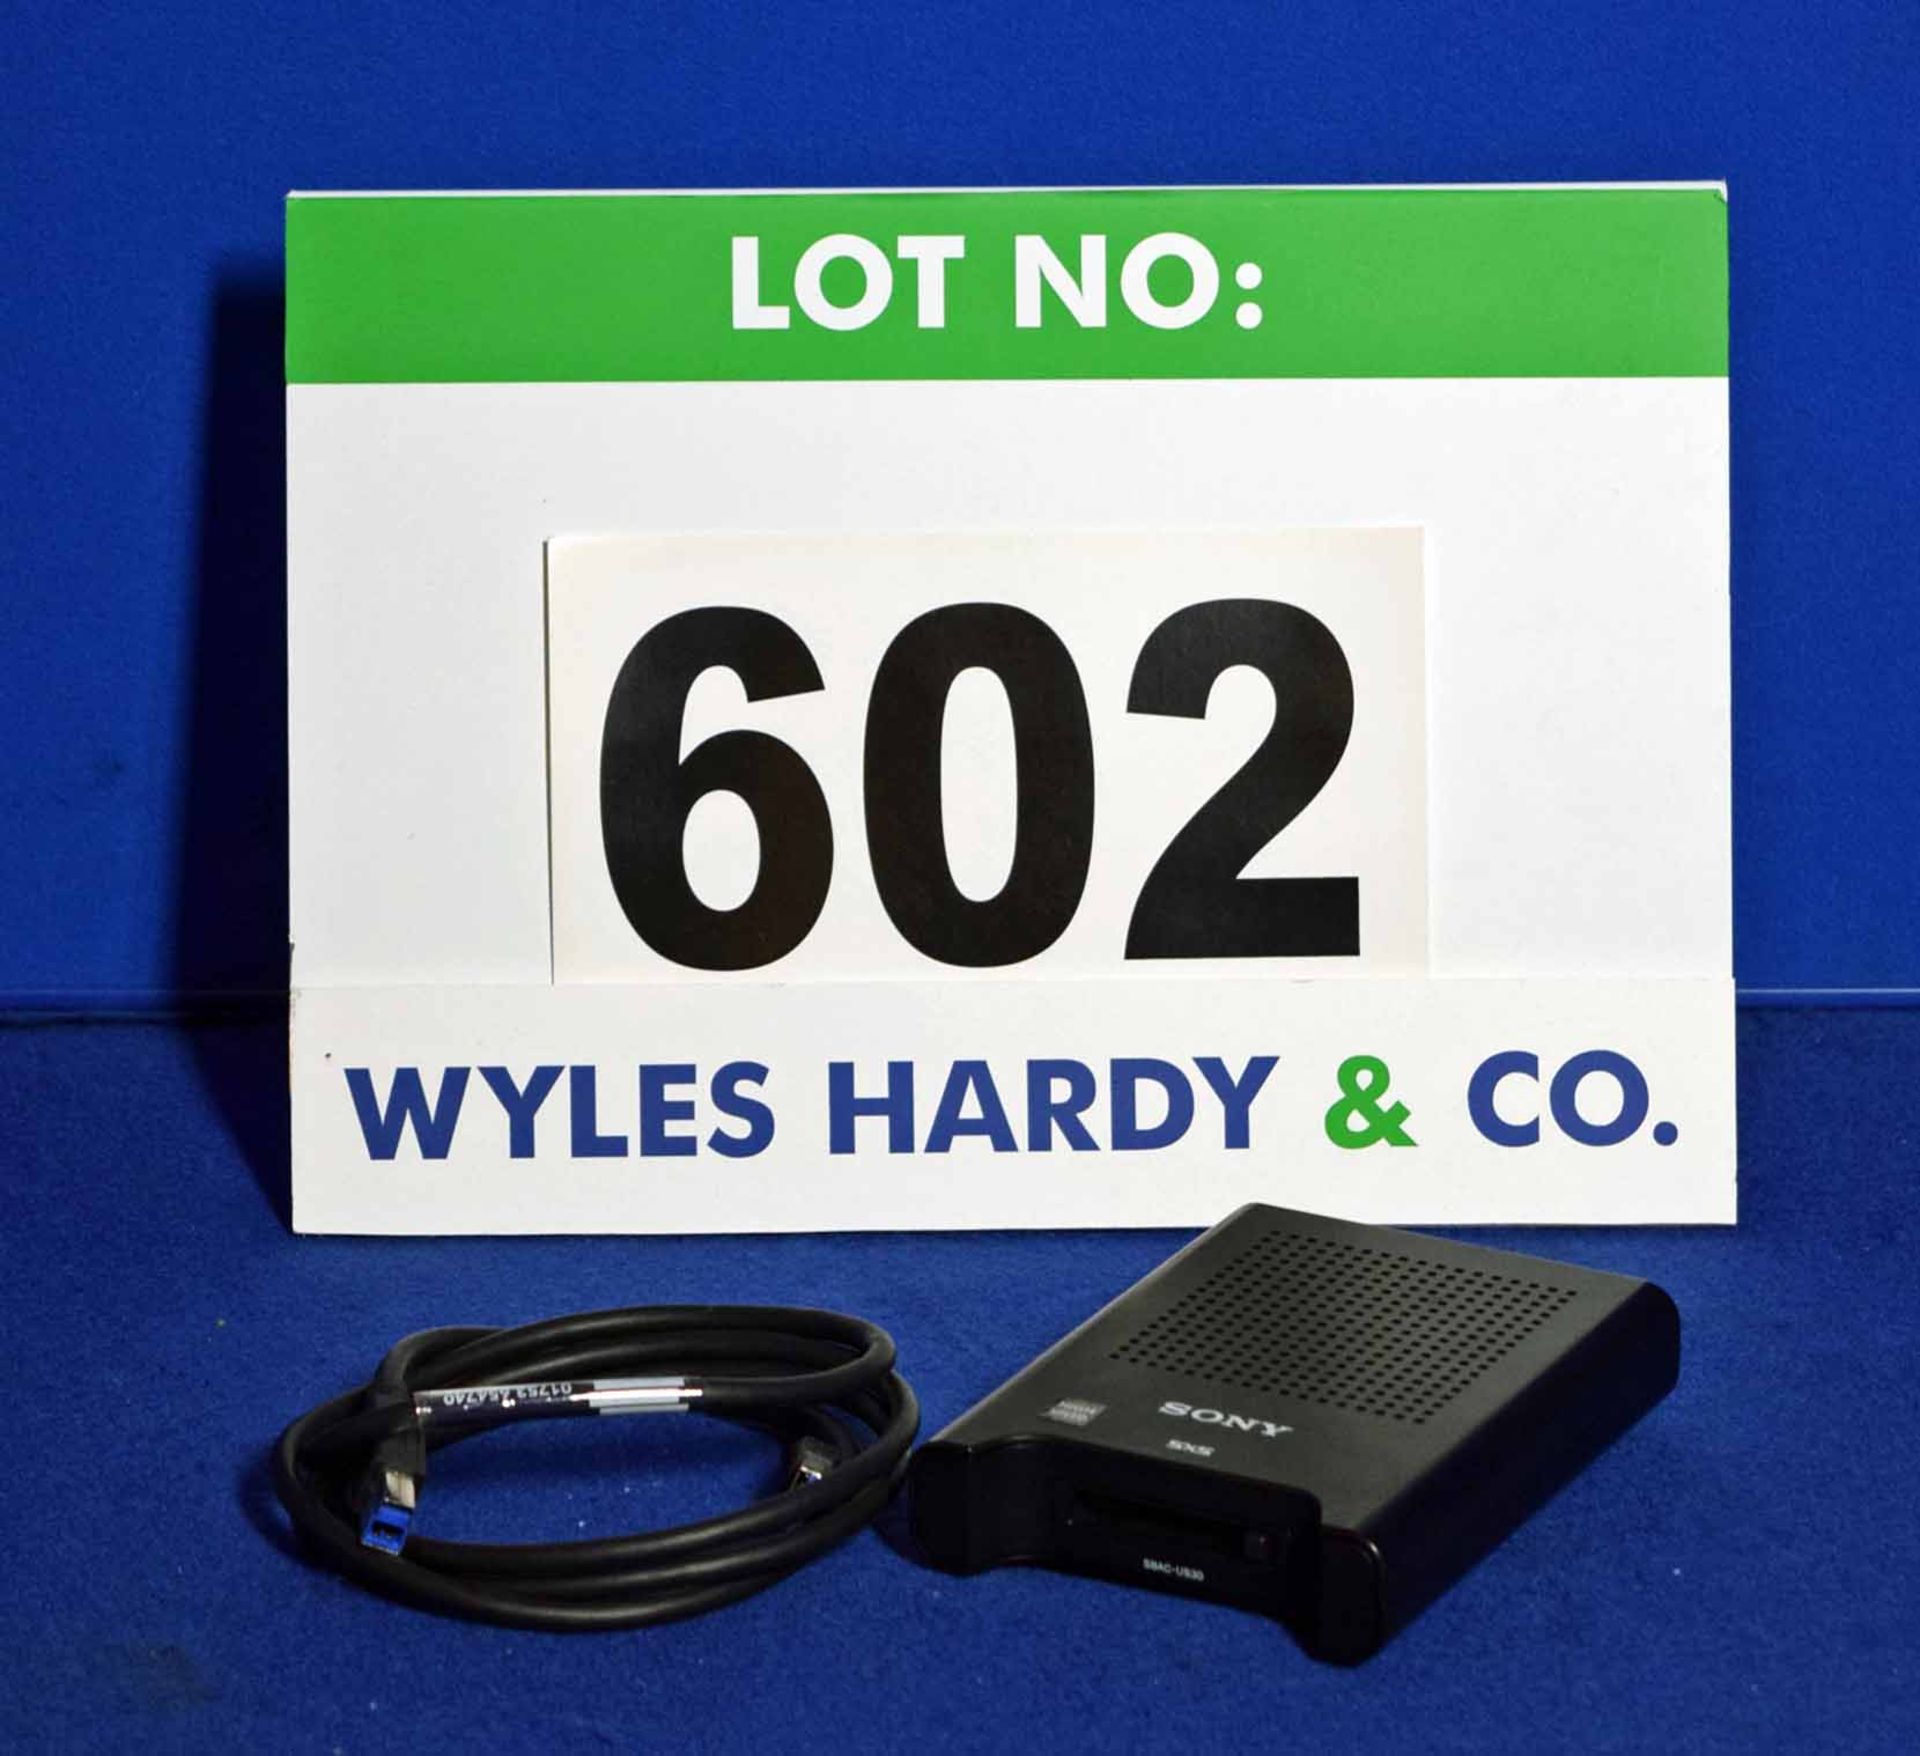 A SONY SBAC-US30 SXS Pro Memory USB 3.0 Card Reader/Writer, Serial No. 3914